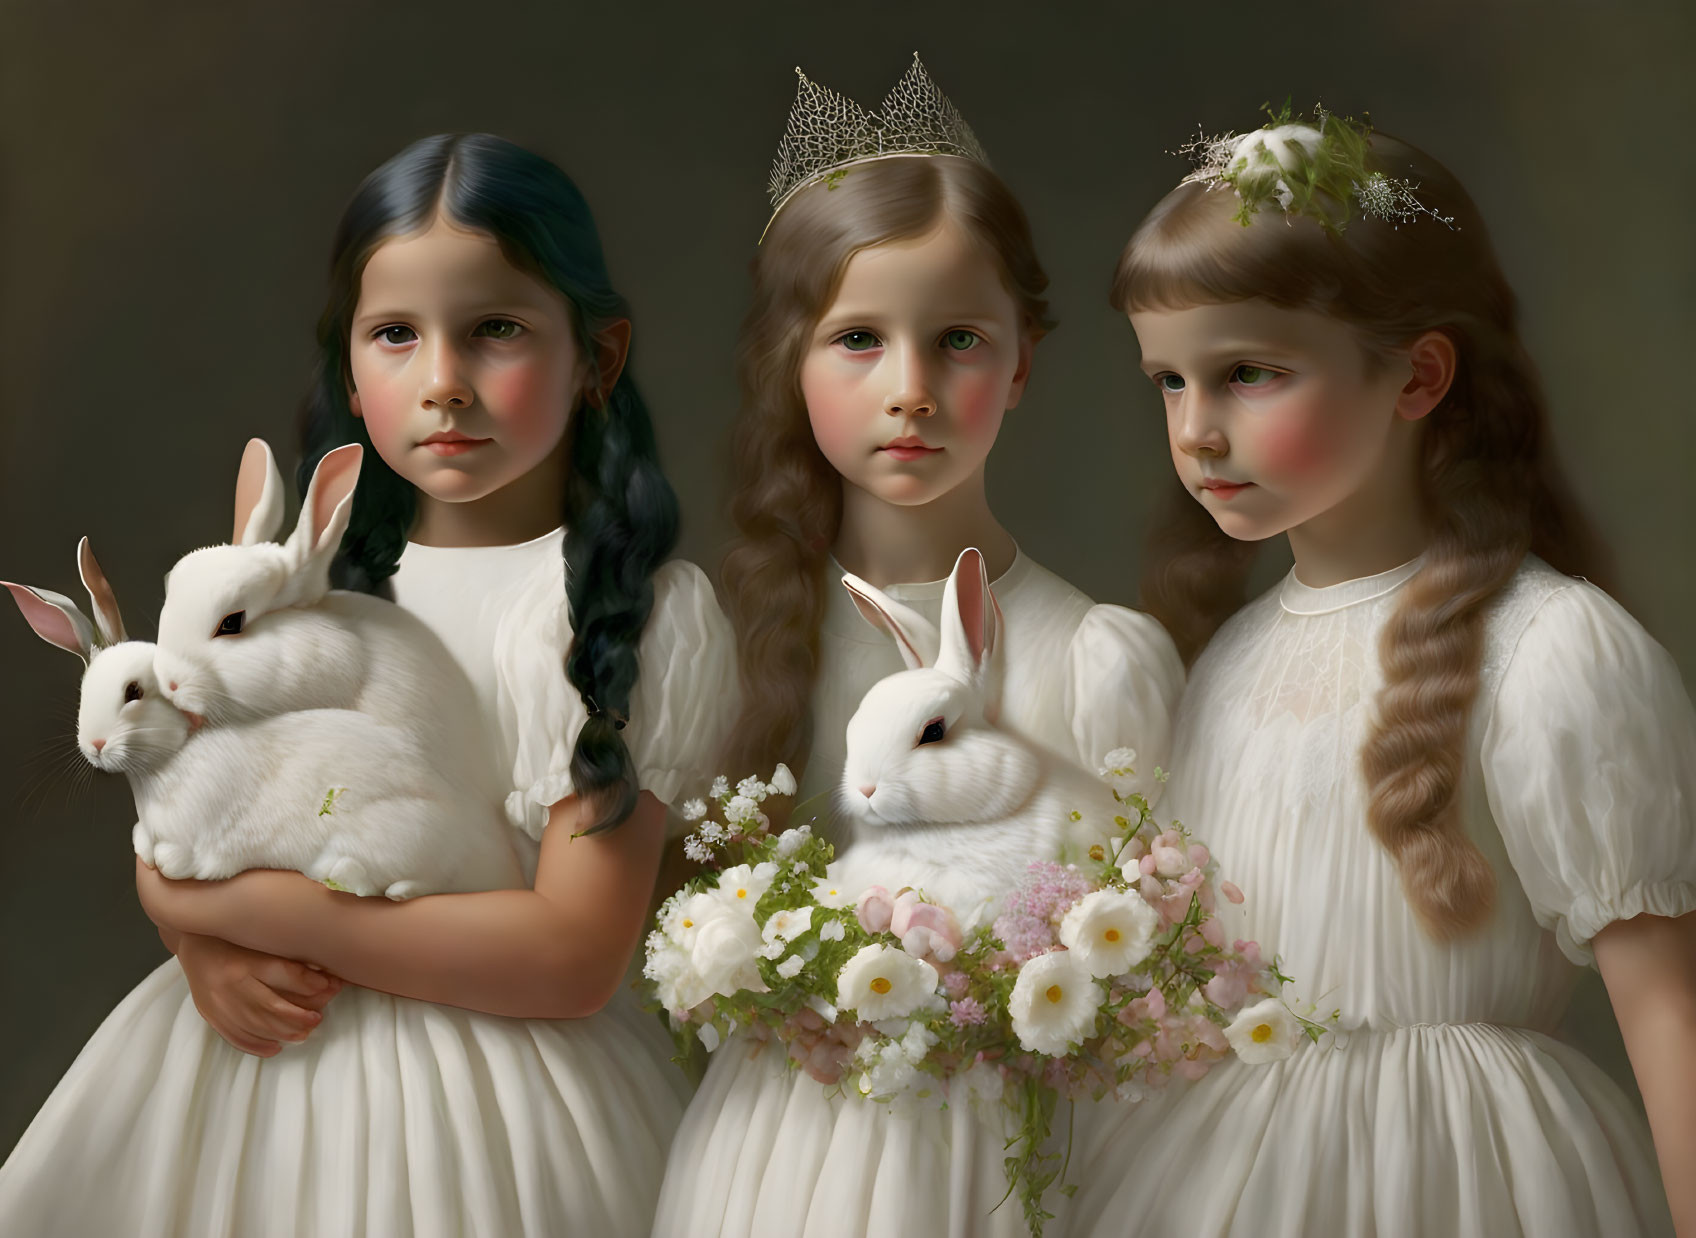 The All Girls Bunny Rabbit Club of Portland, Maine